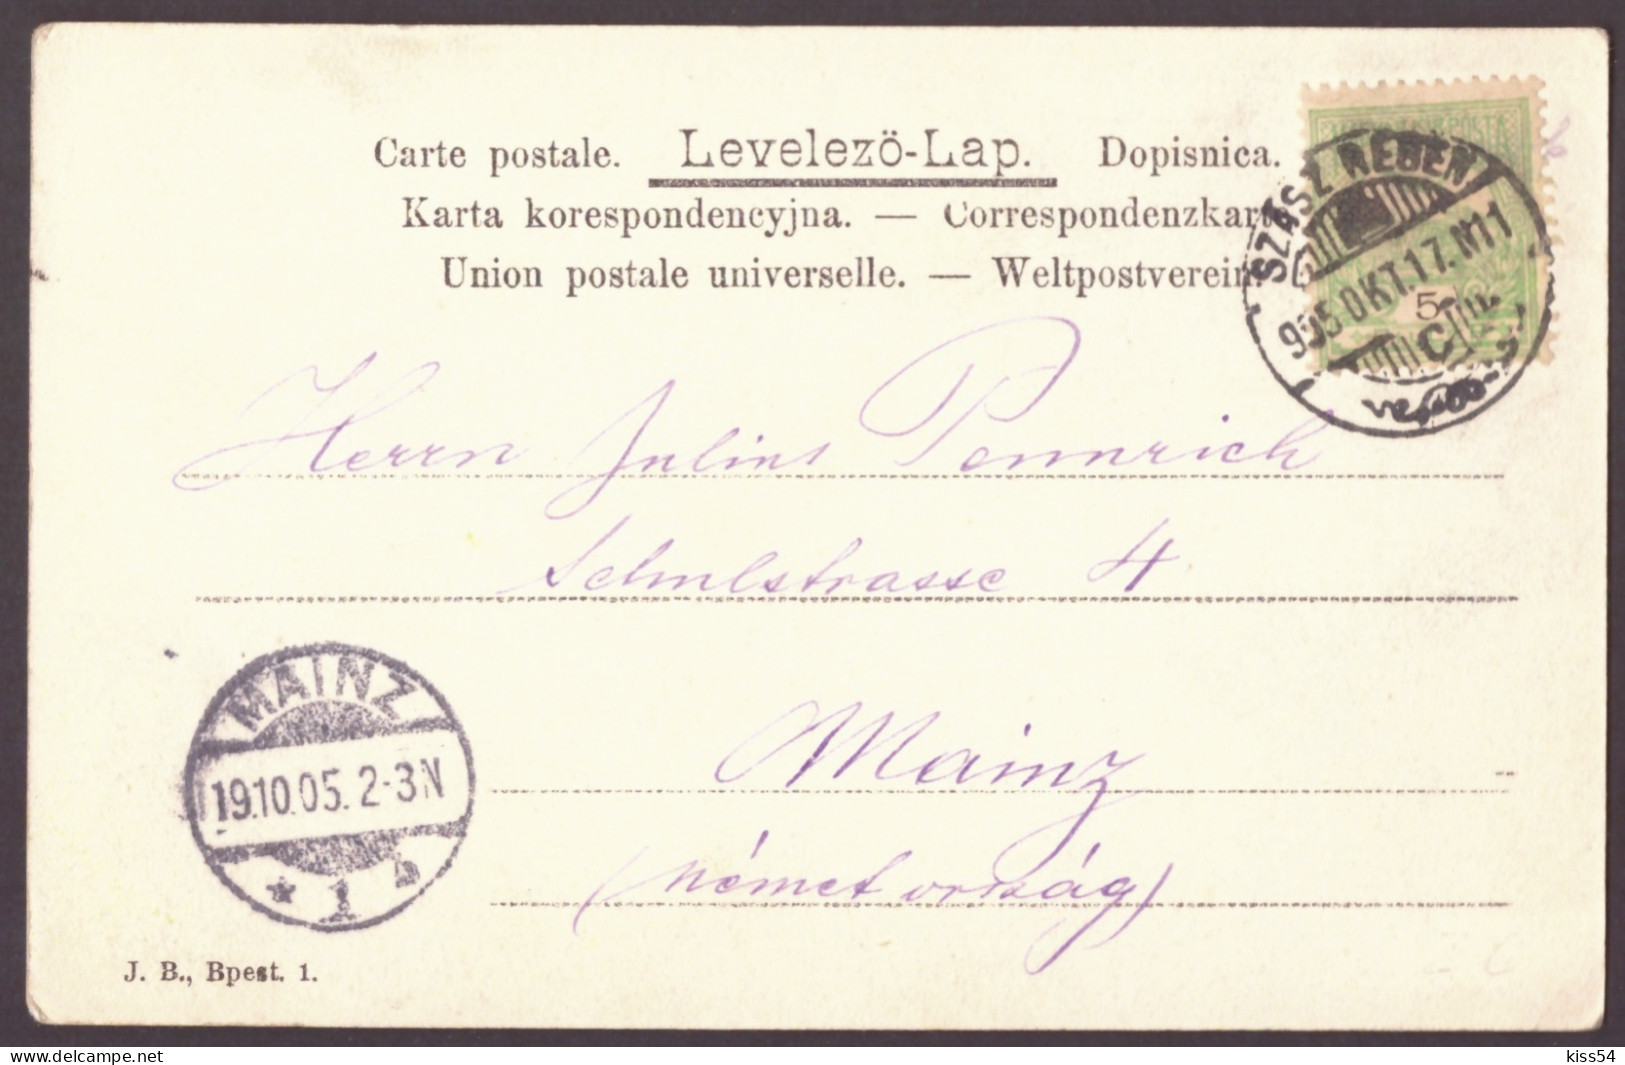 RO 999 - 24867 REGHIN, Mures, Farm Wedding, Romania - Old Postcard - Used - 1905 - Romania